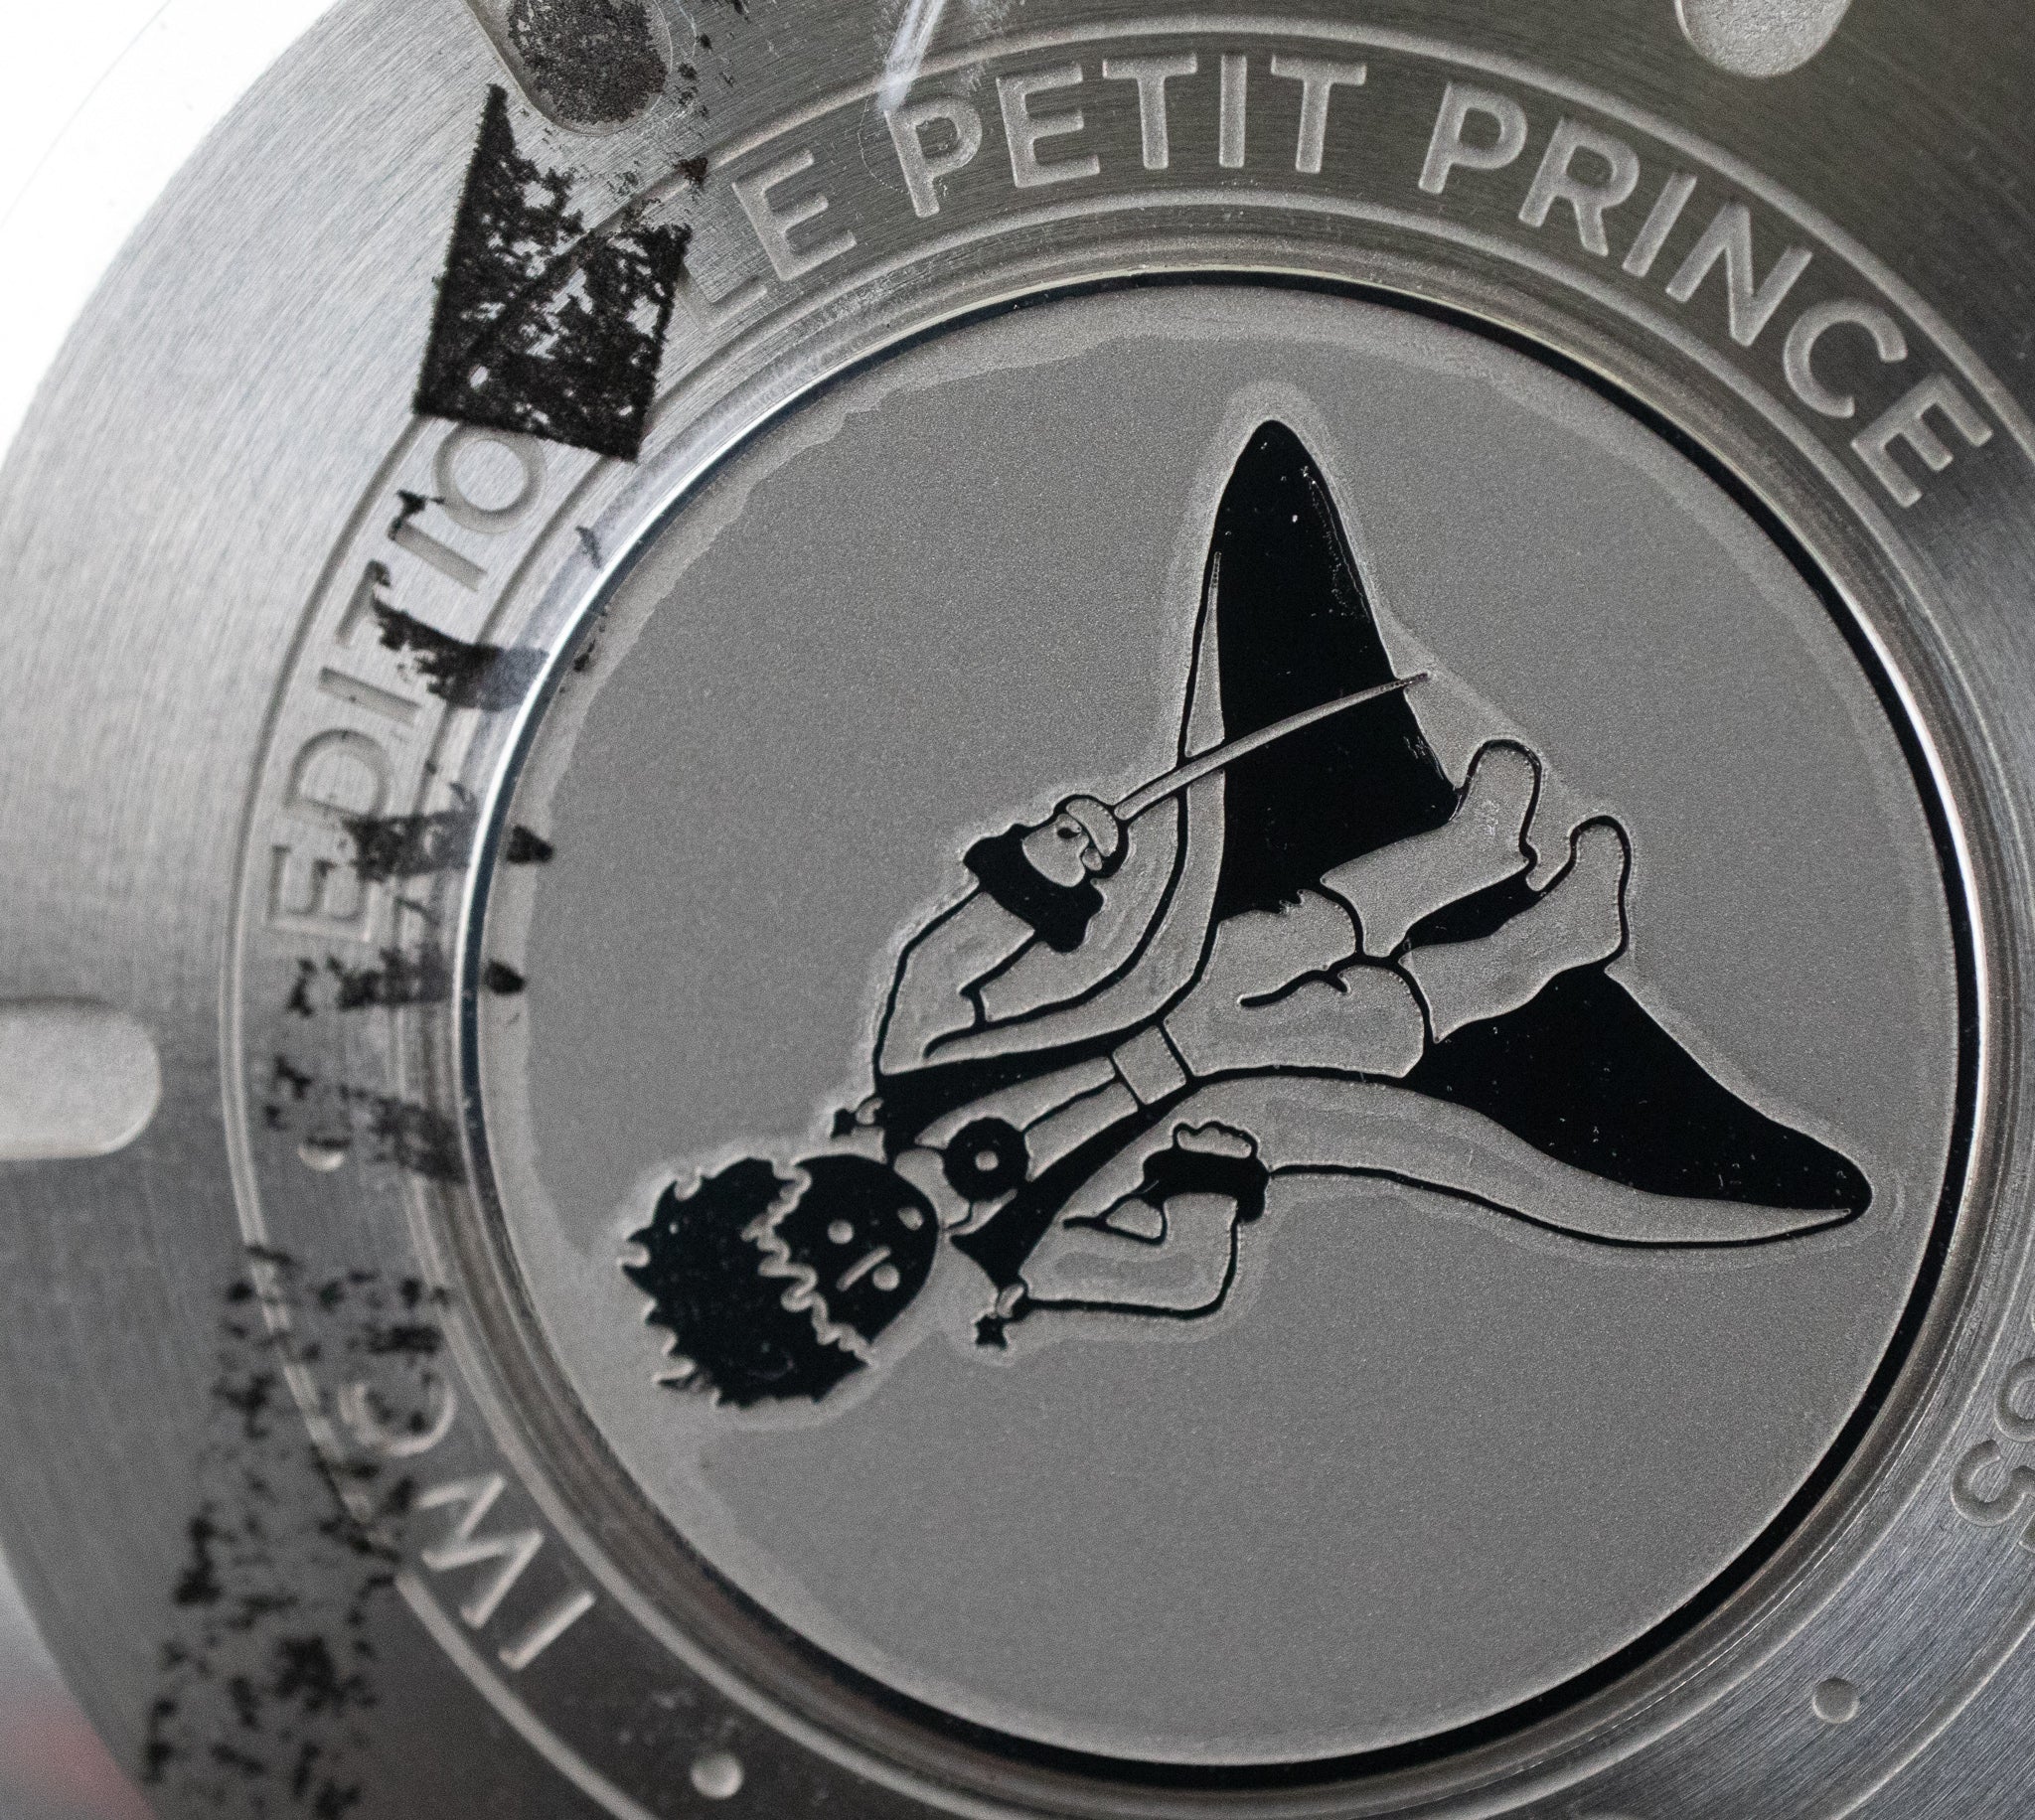 Pre-Owned IWC Mark XVIII "Le Petit Prince" IW327004